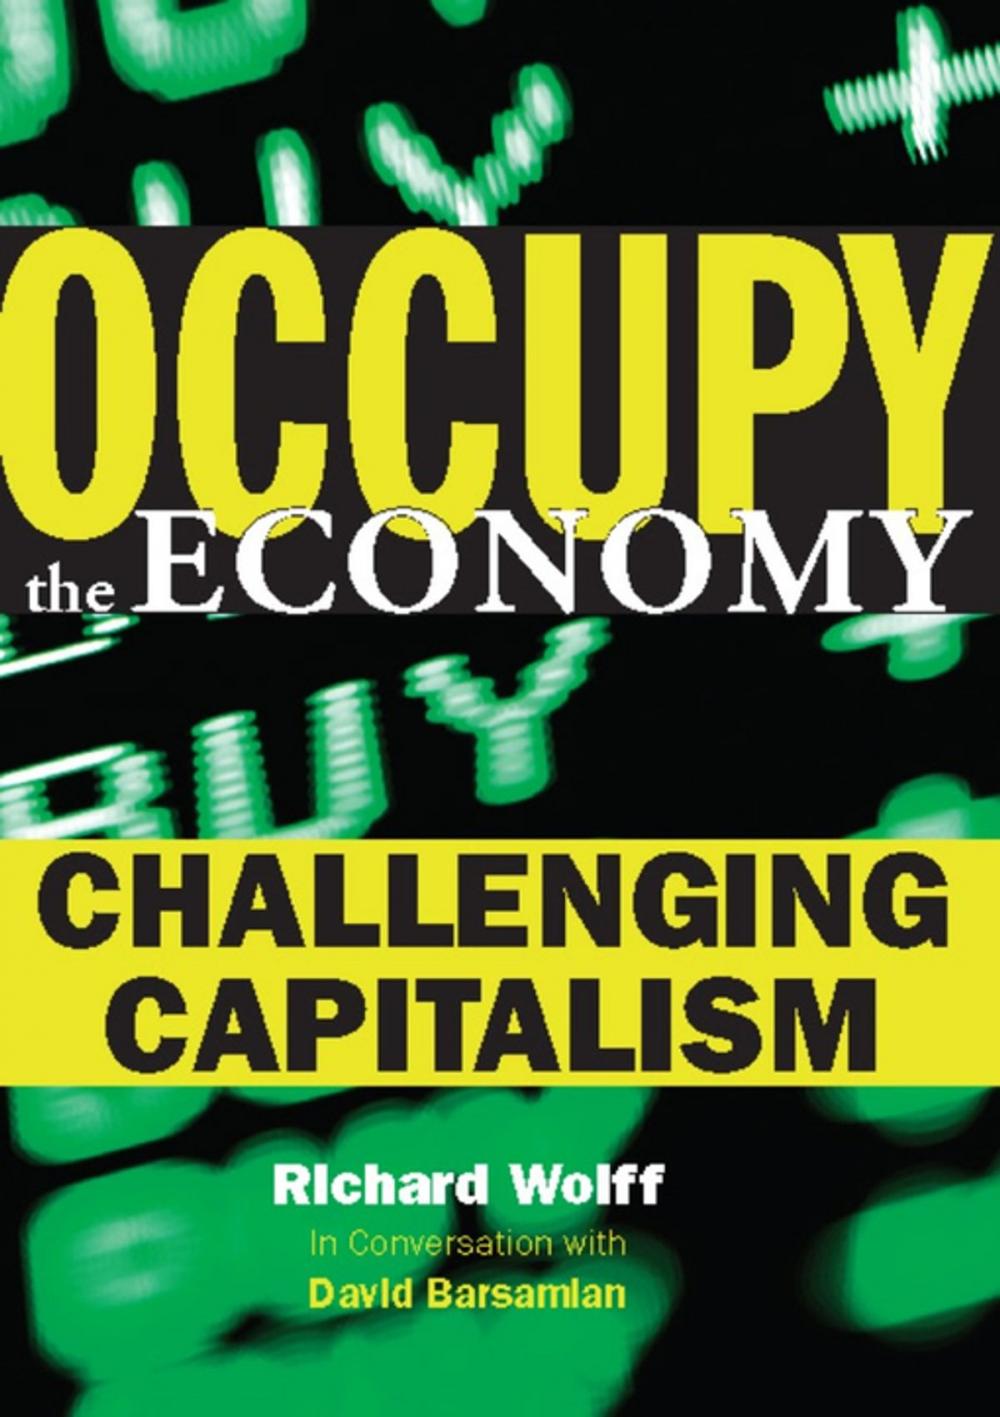 Big bigCover of Occupy the Economy